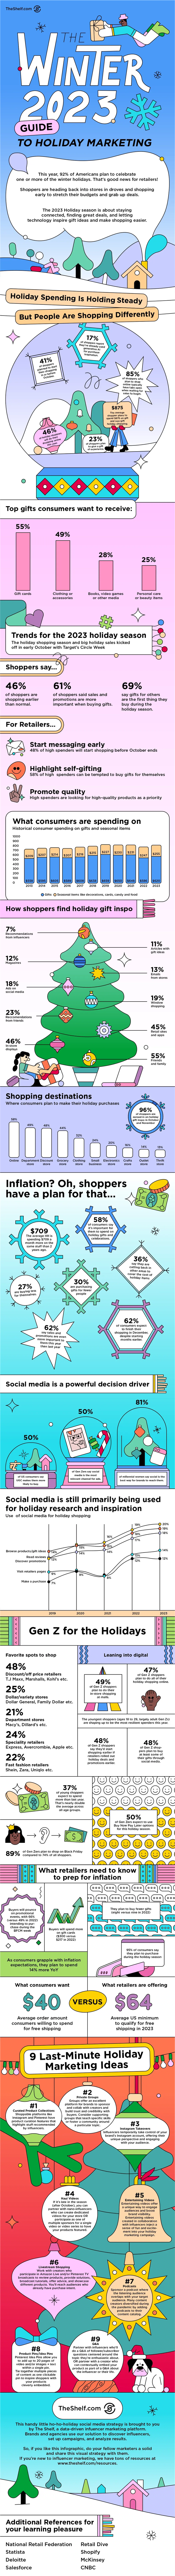 Holiday Influencer Marketing Infographic